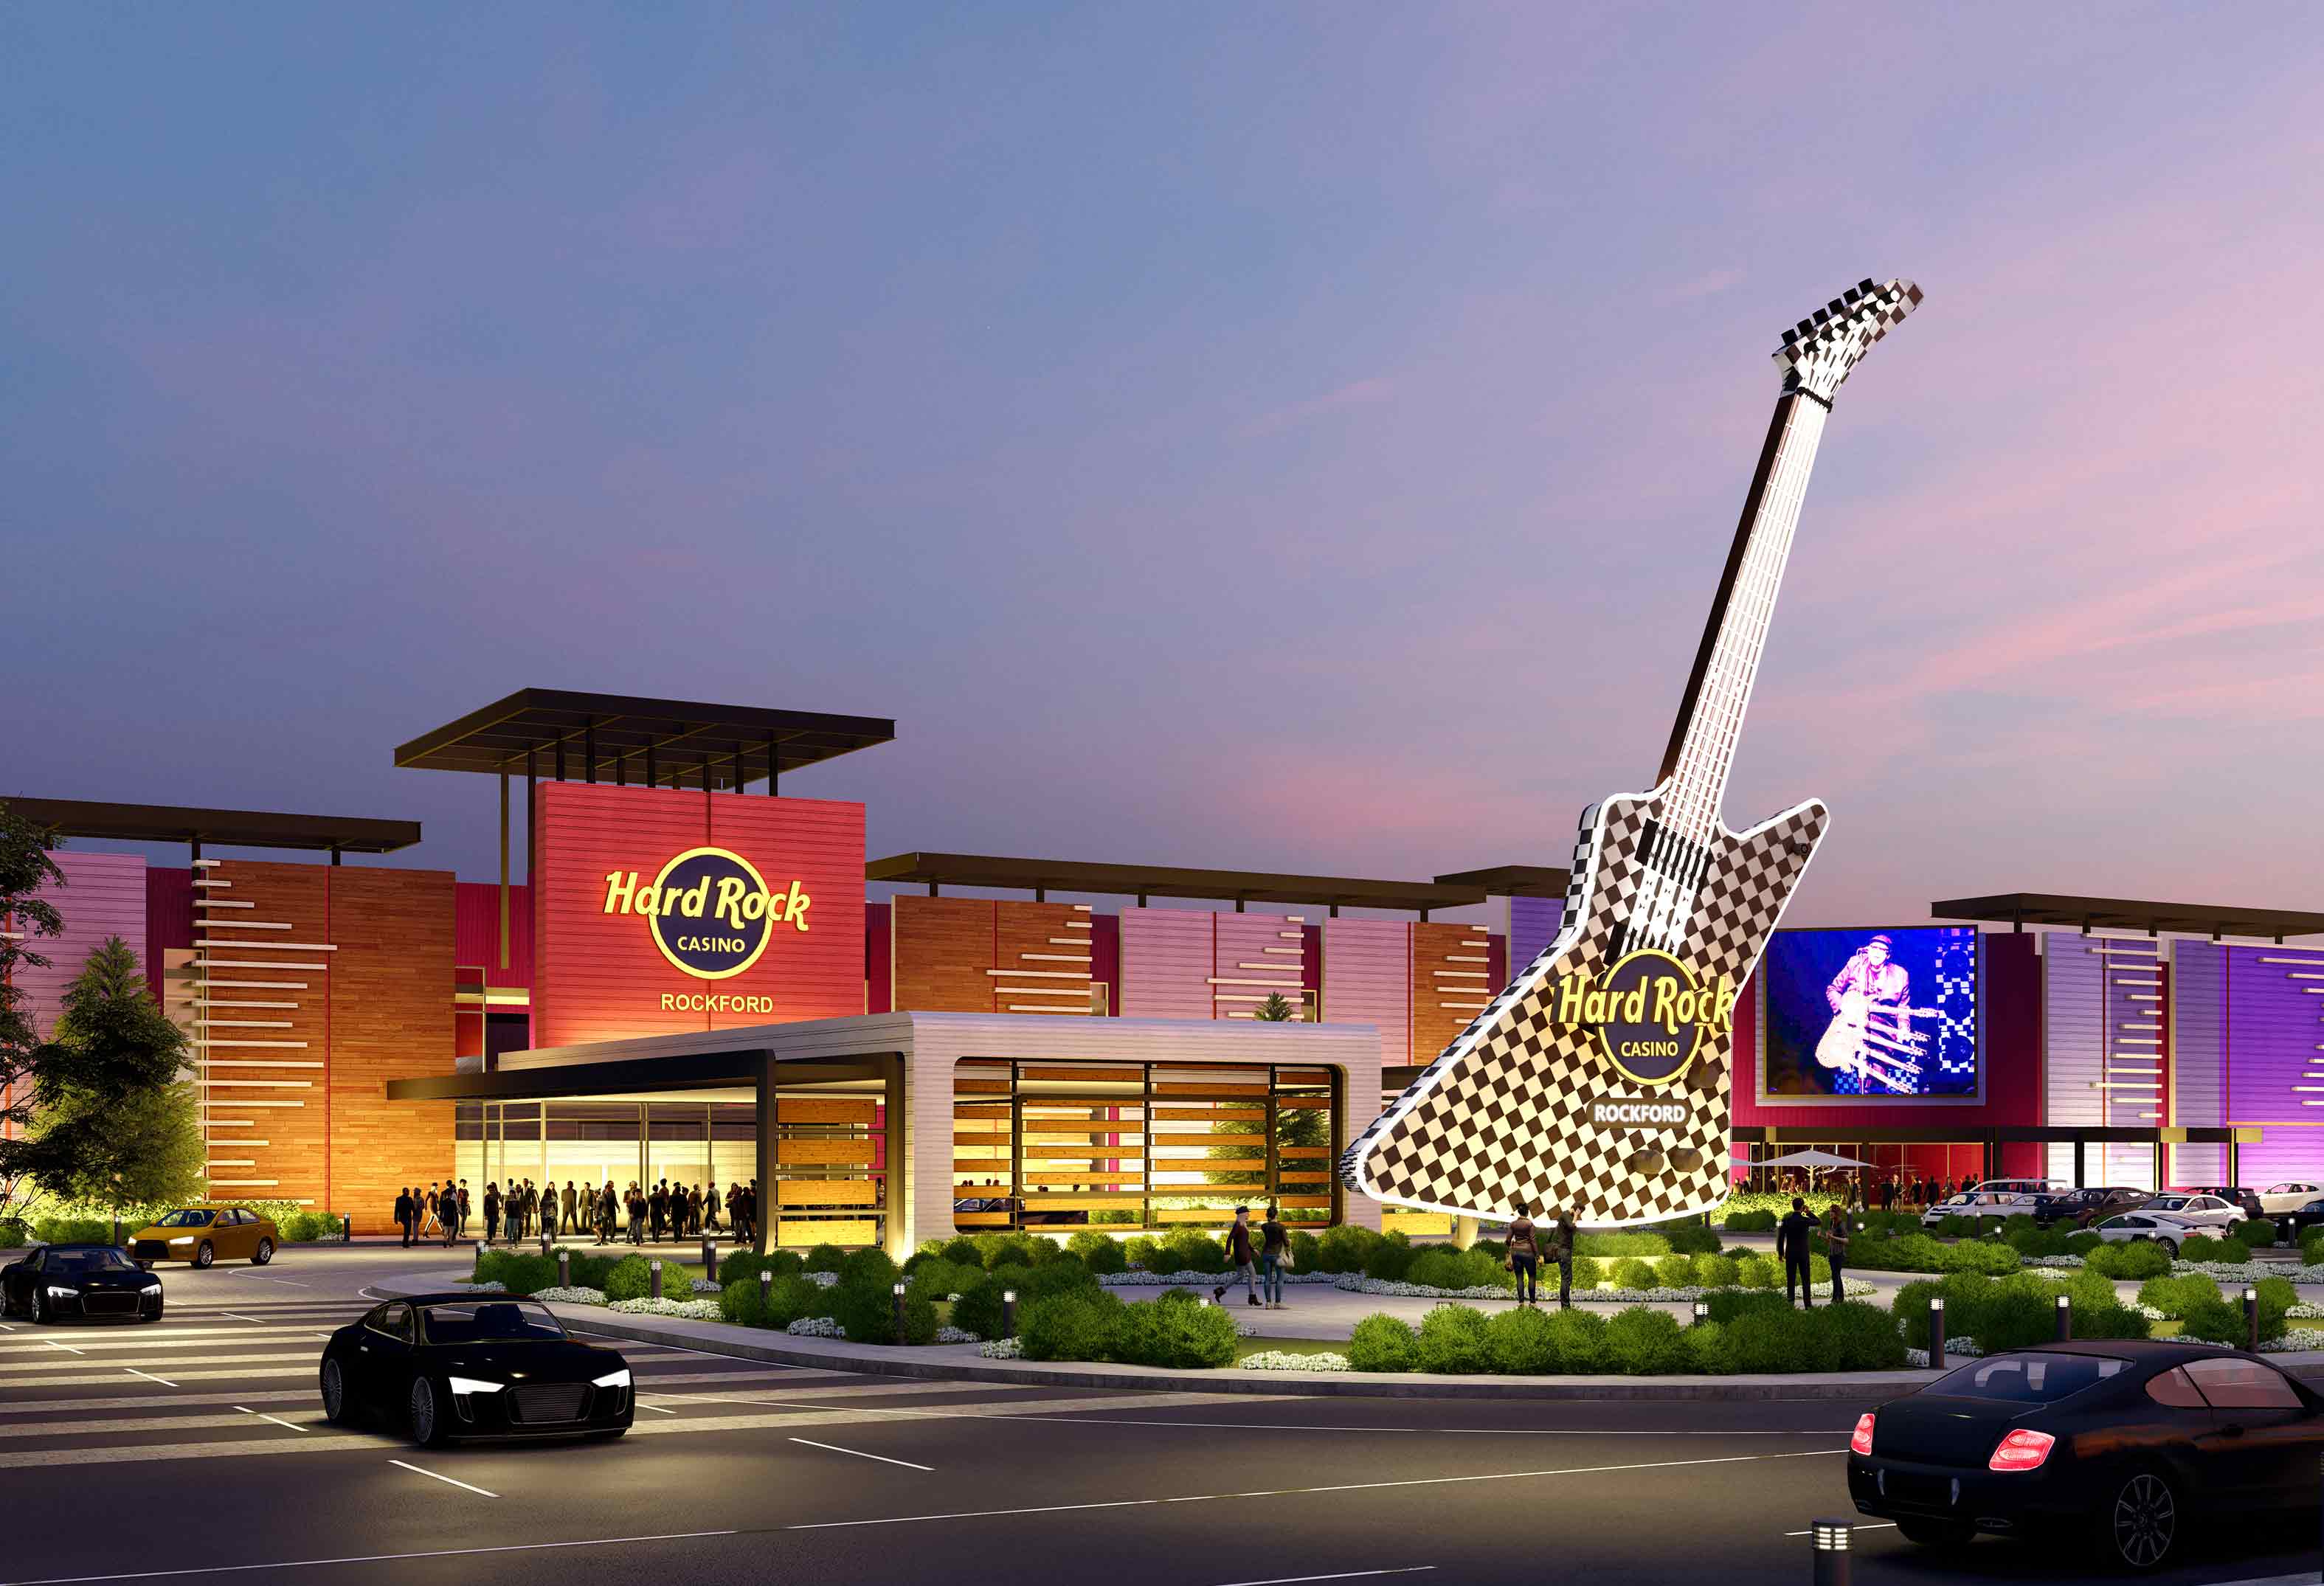 Hard Rock Casino Rockford coming soon!